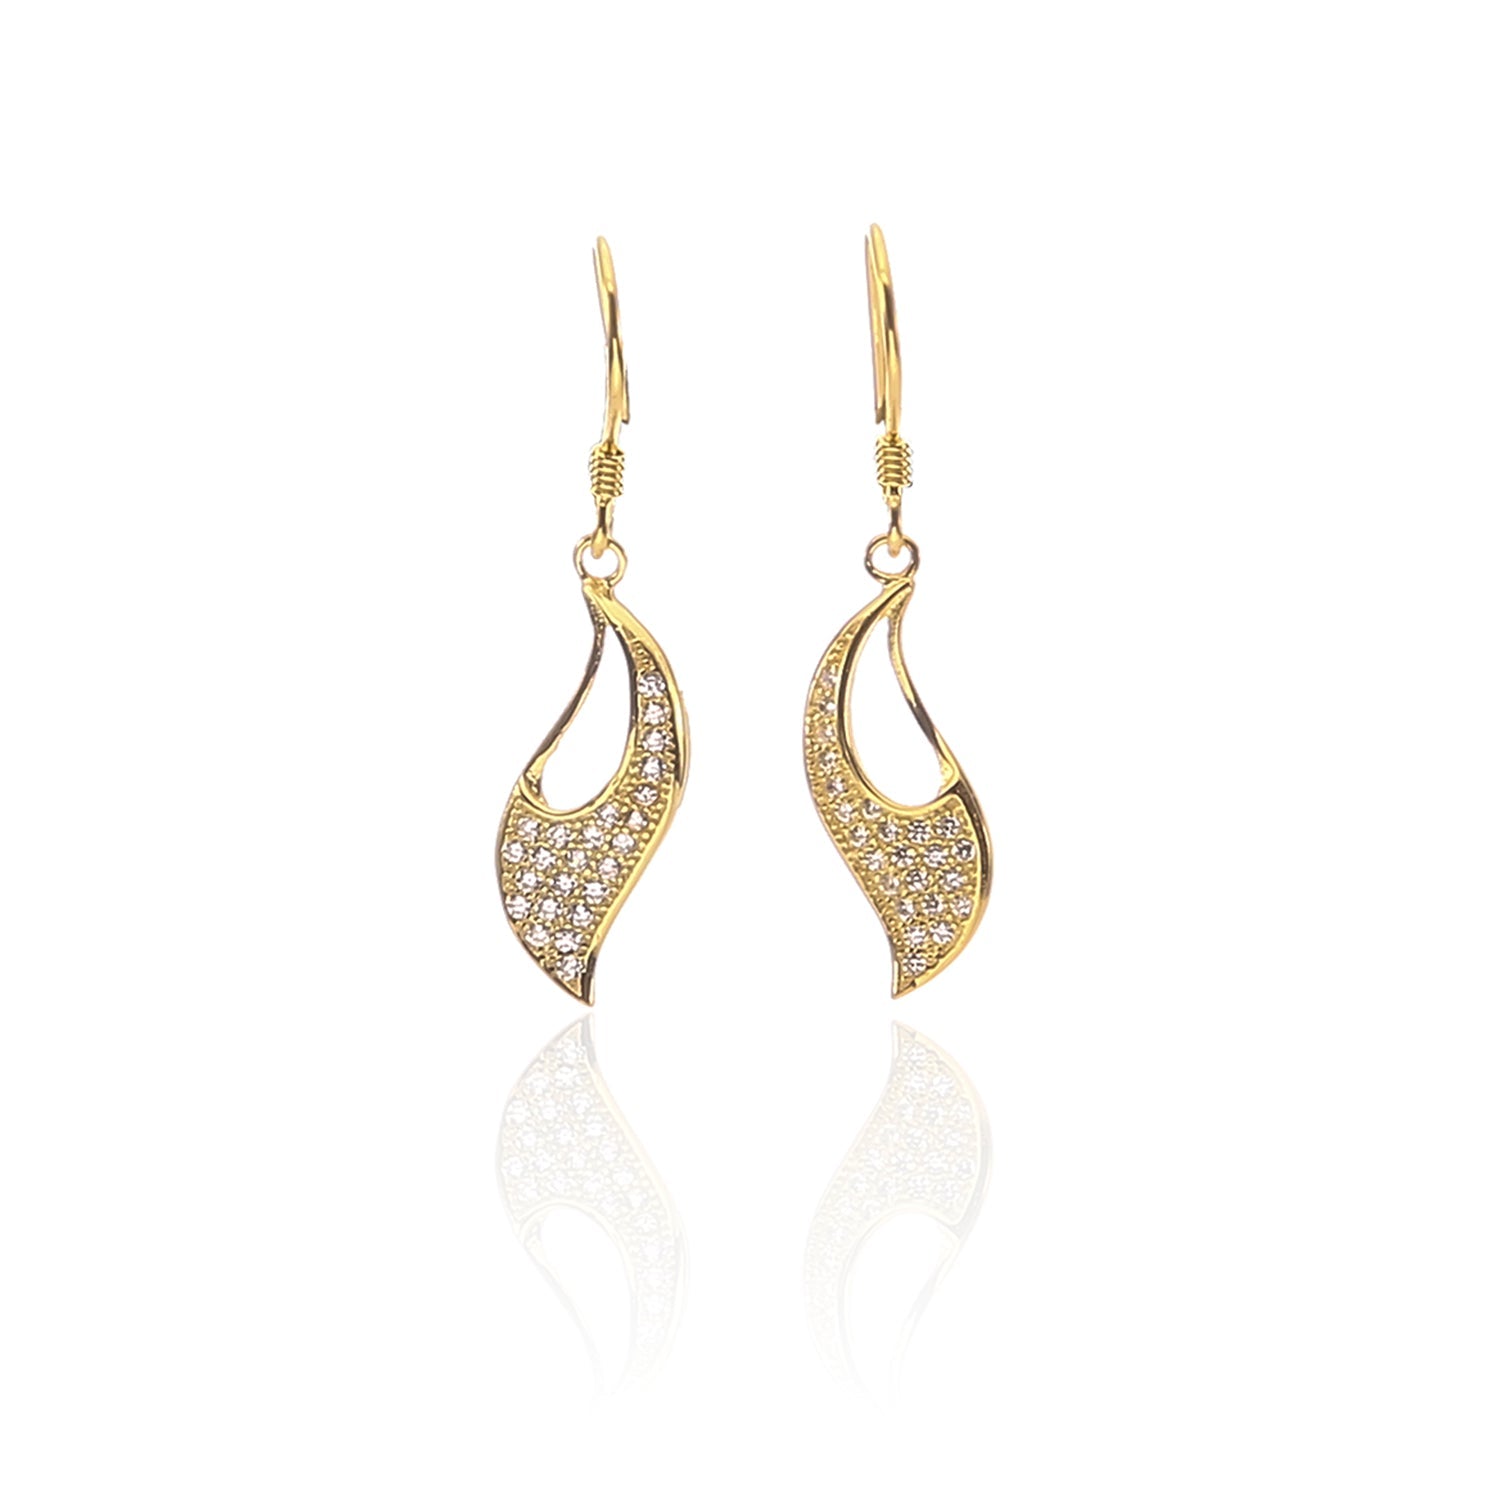 Roseberys London | Joanna Thomson. A 9ct gold, peridot and cultured pearl